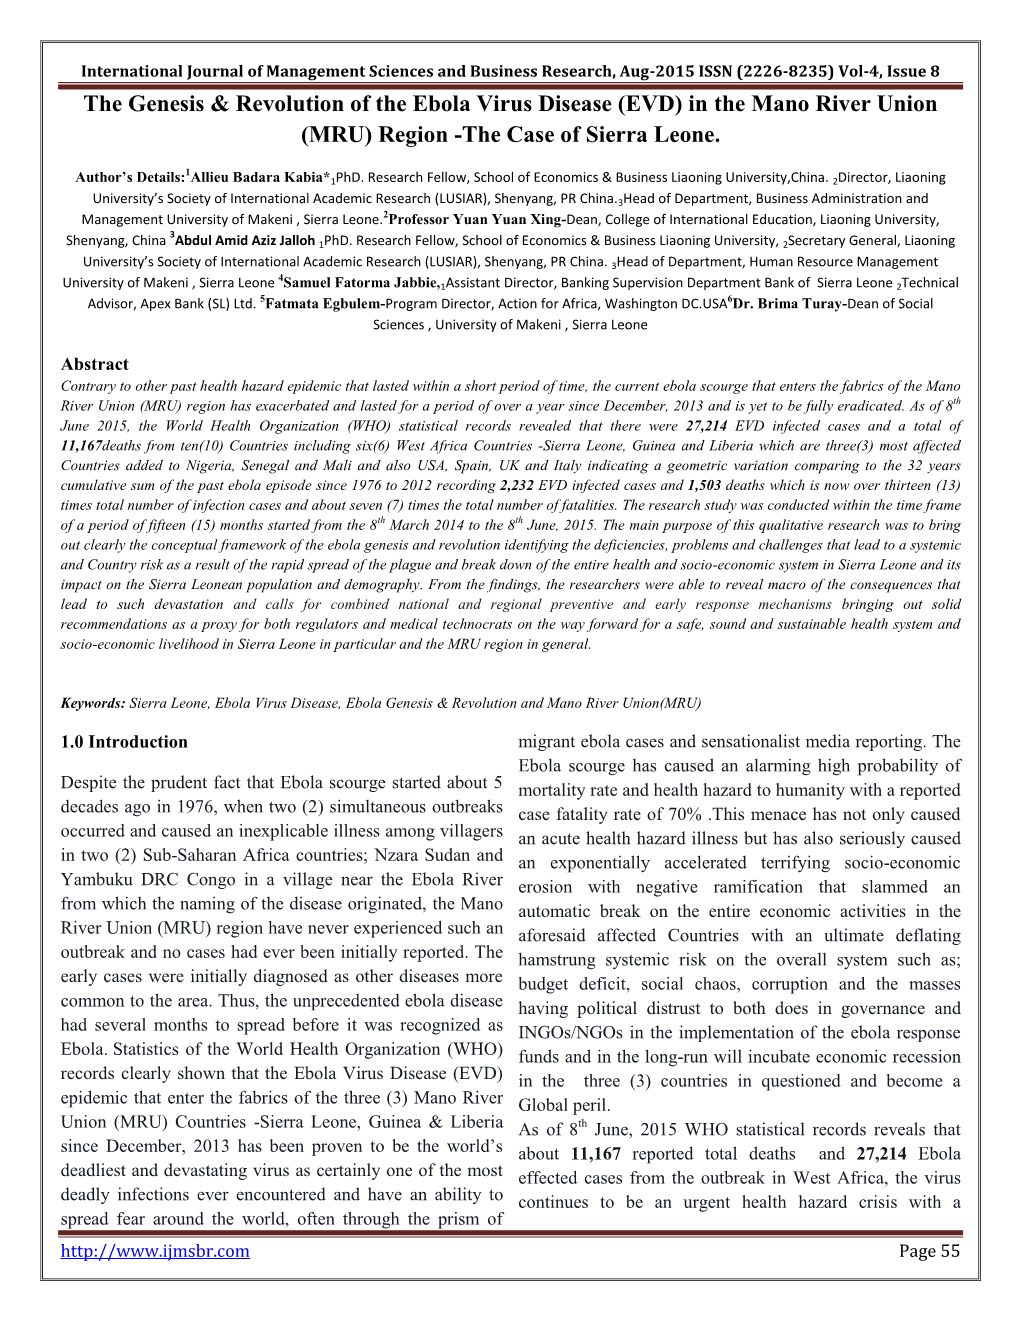 Vol-4, Issue 8 the Genesis & Revolution of the Ebola Virus Disease (EVD) in the Mano River Union (MRU) Region -The Case of Sierra Leone